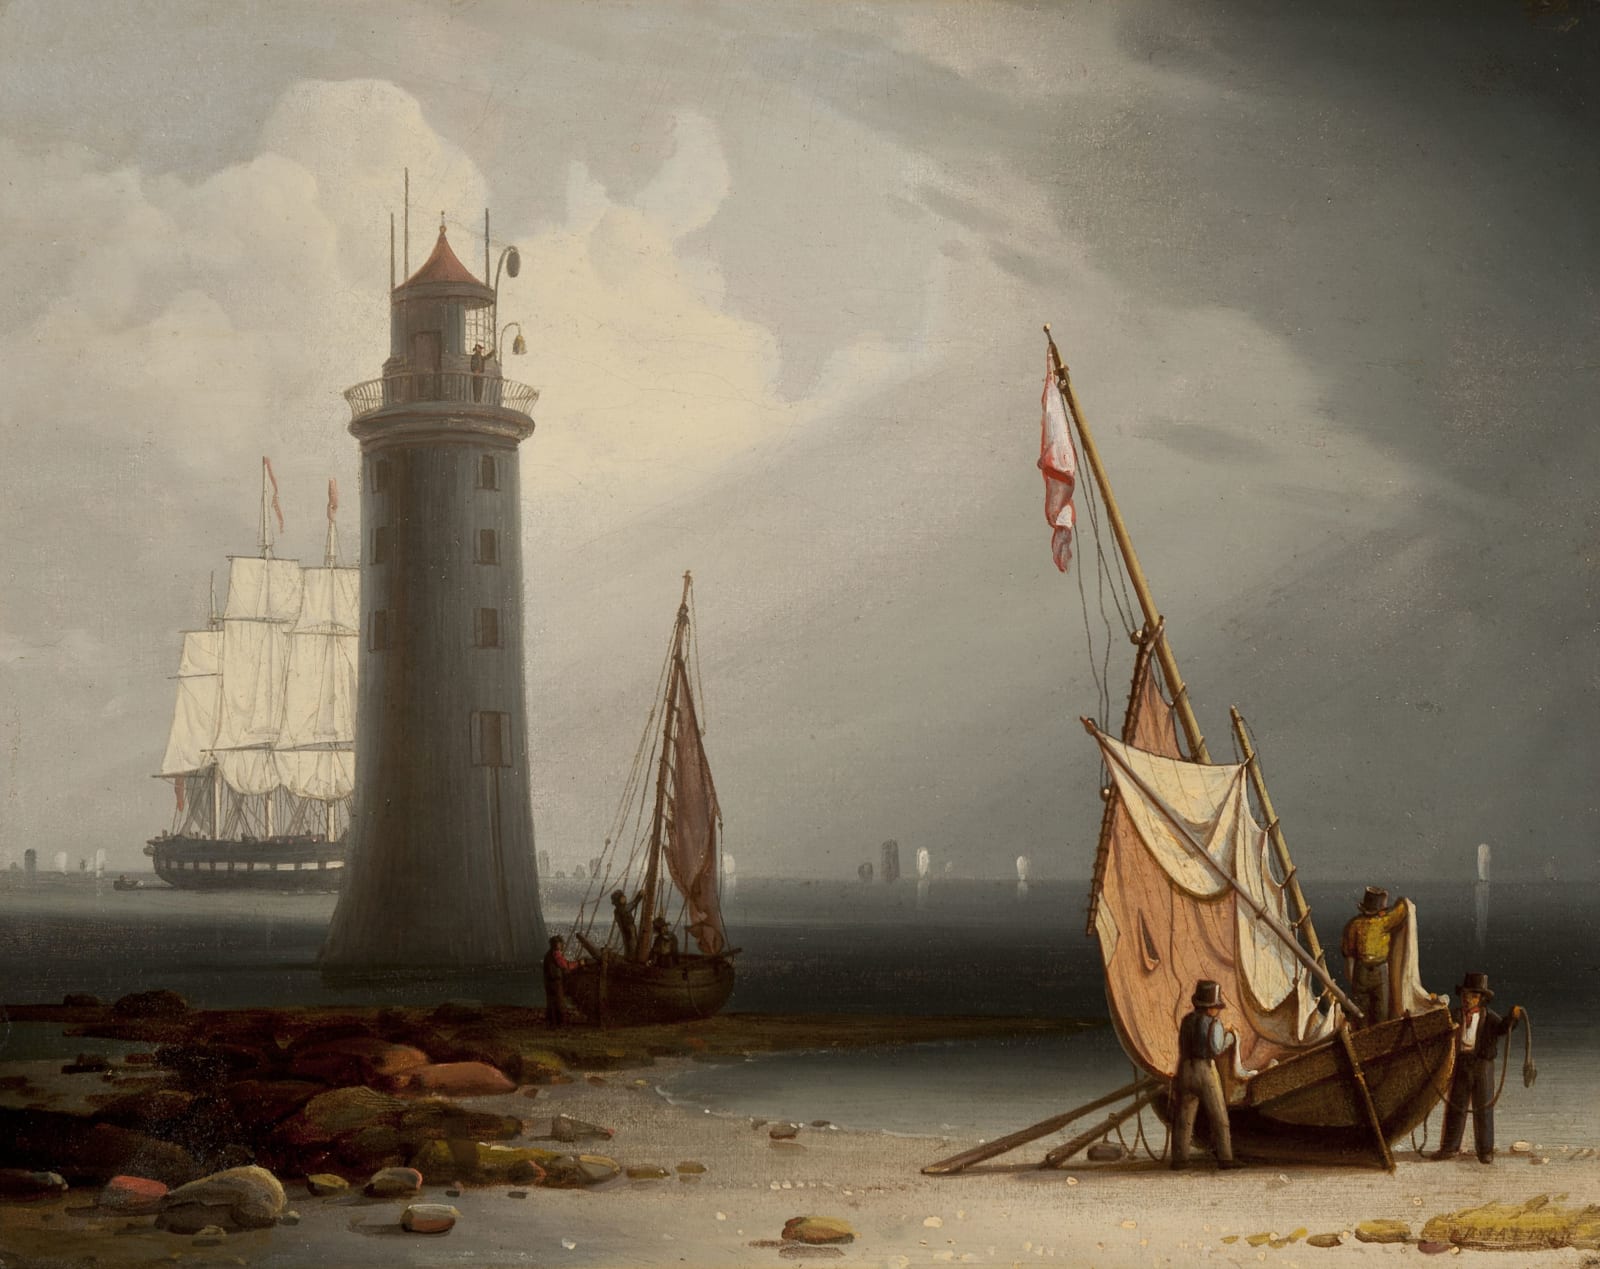 Robert Salmon, Perch Lighthouse, 1830s